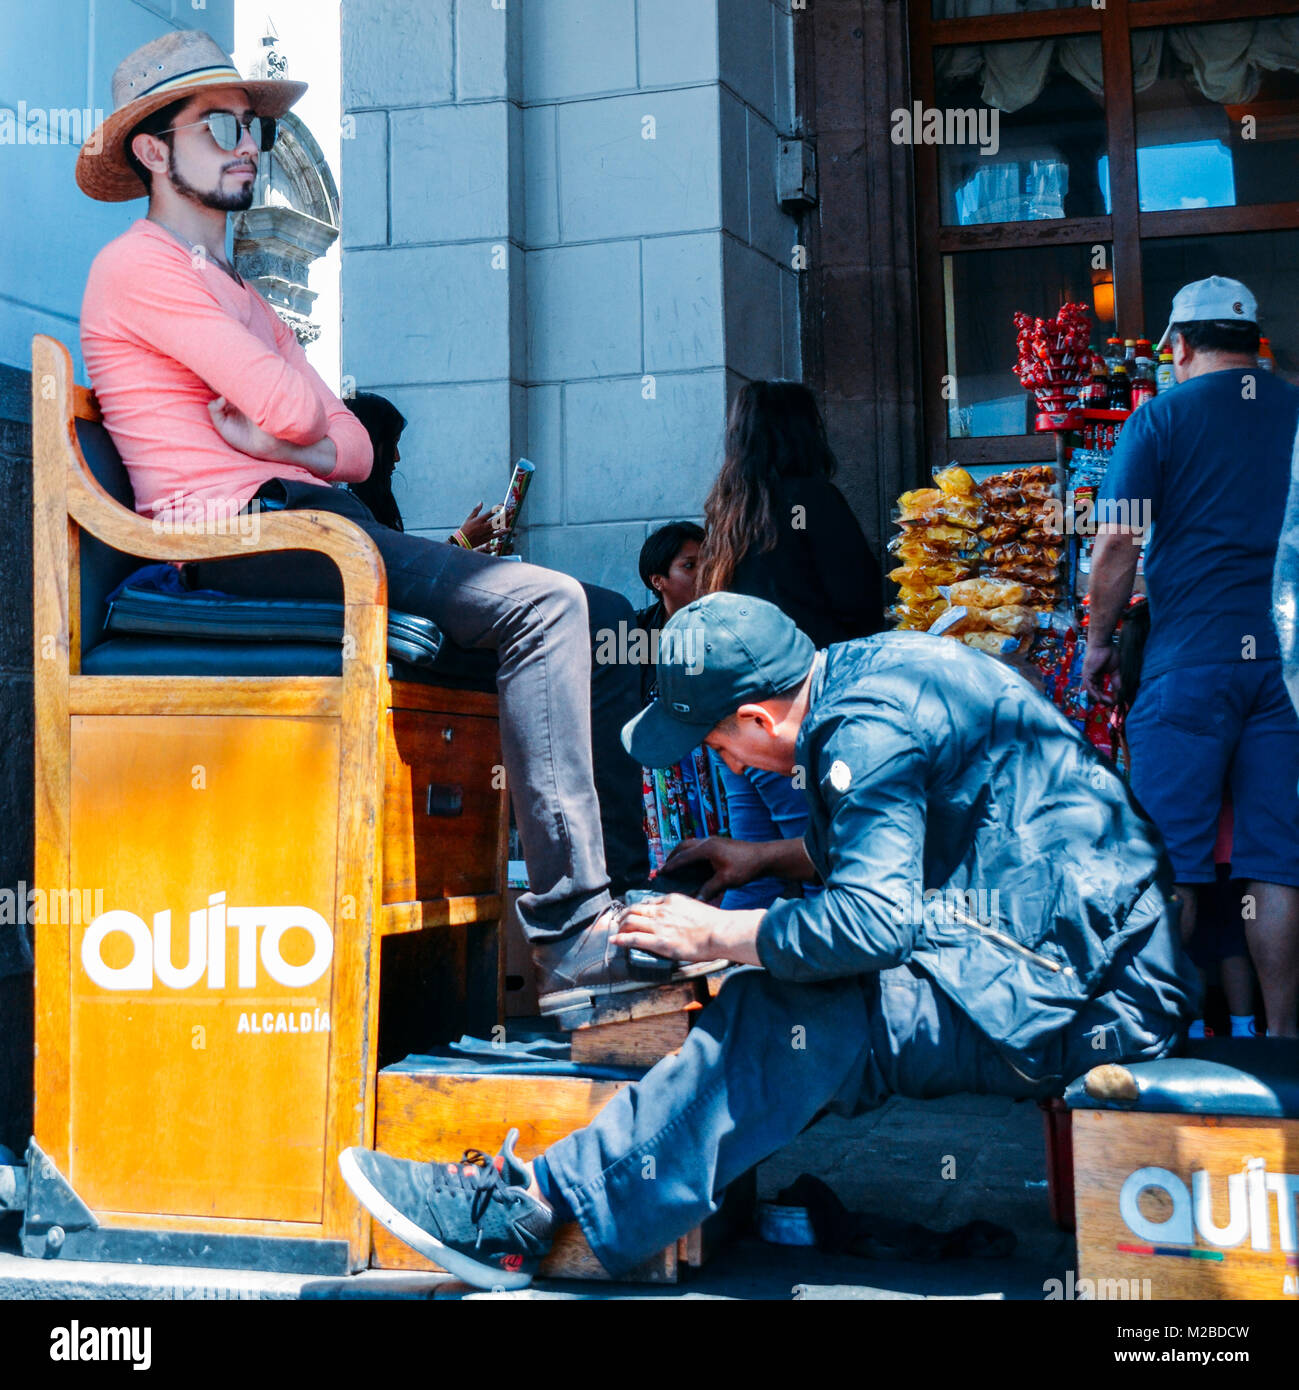 Quito, Ecuador, December 17, 2017: Shoe shine worker shines a client's shoes in the historic centre of Quito, Ecuador Stock Photo